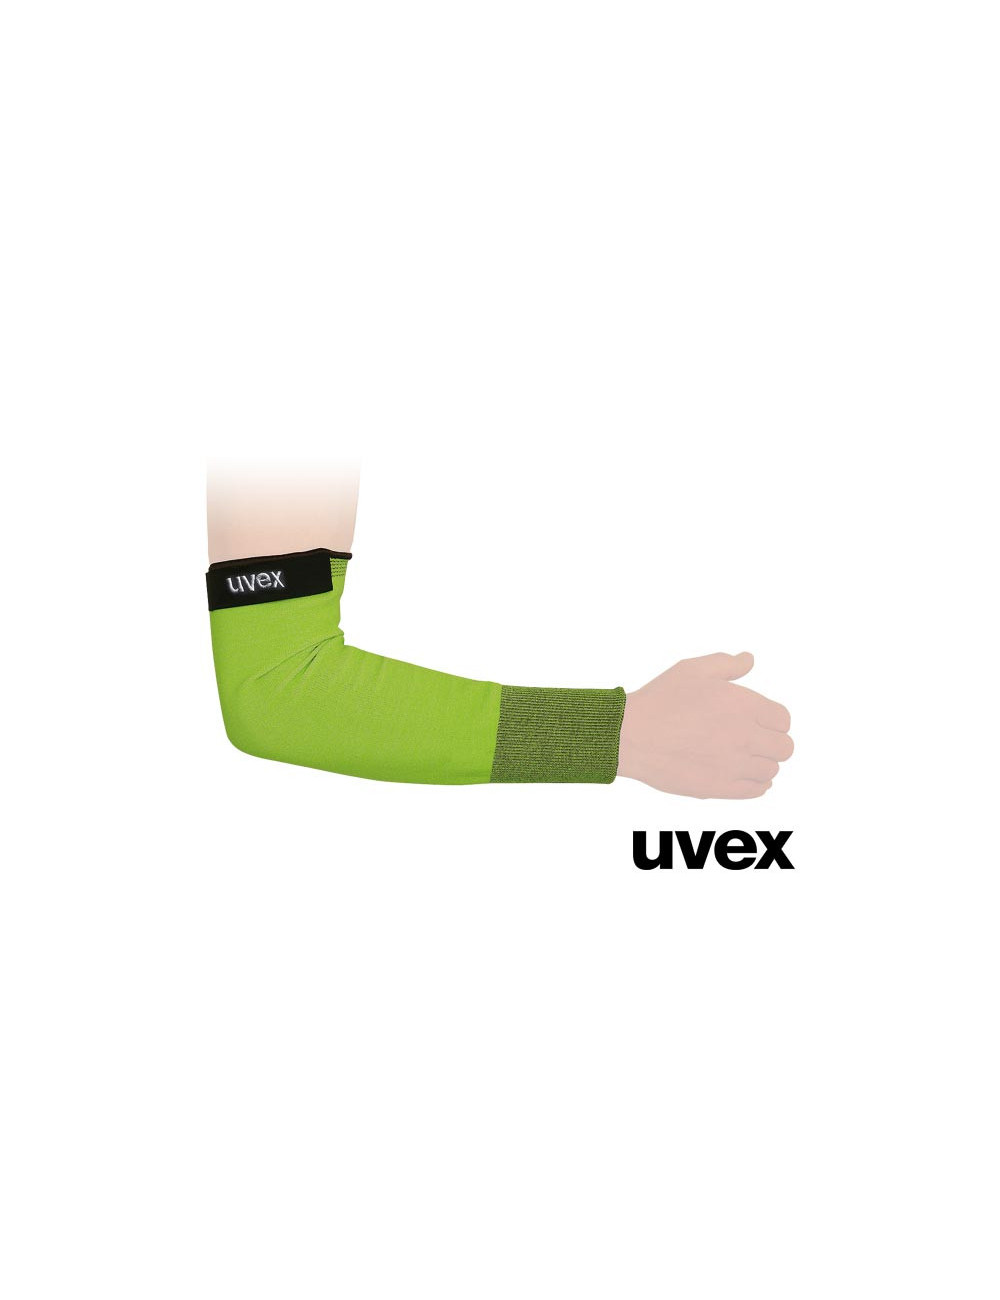 Forearm pads zb green-black Uvex Ruvex-sleeve